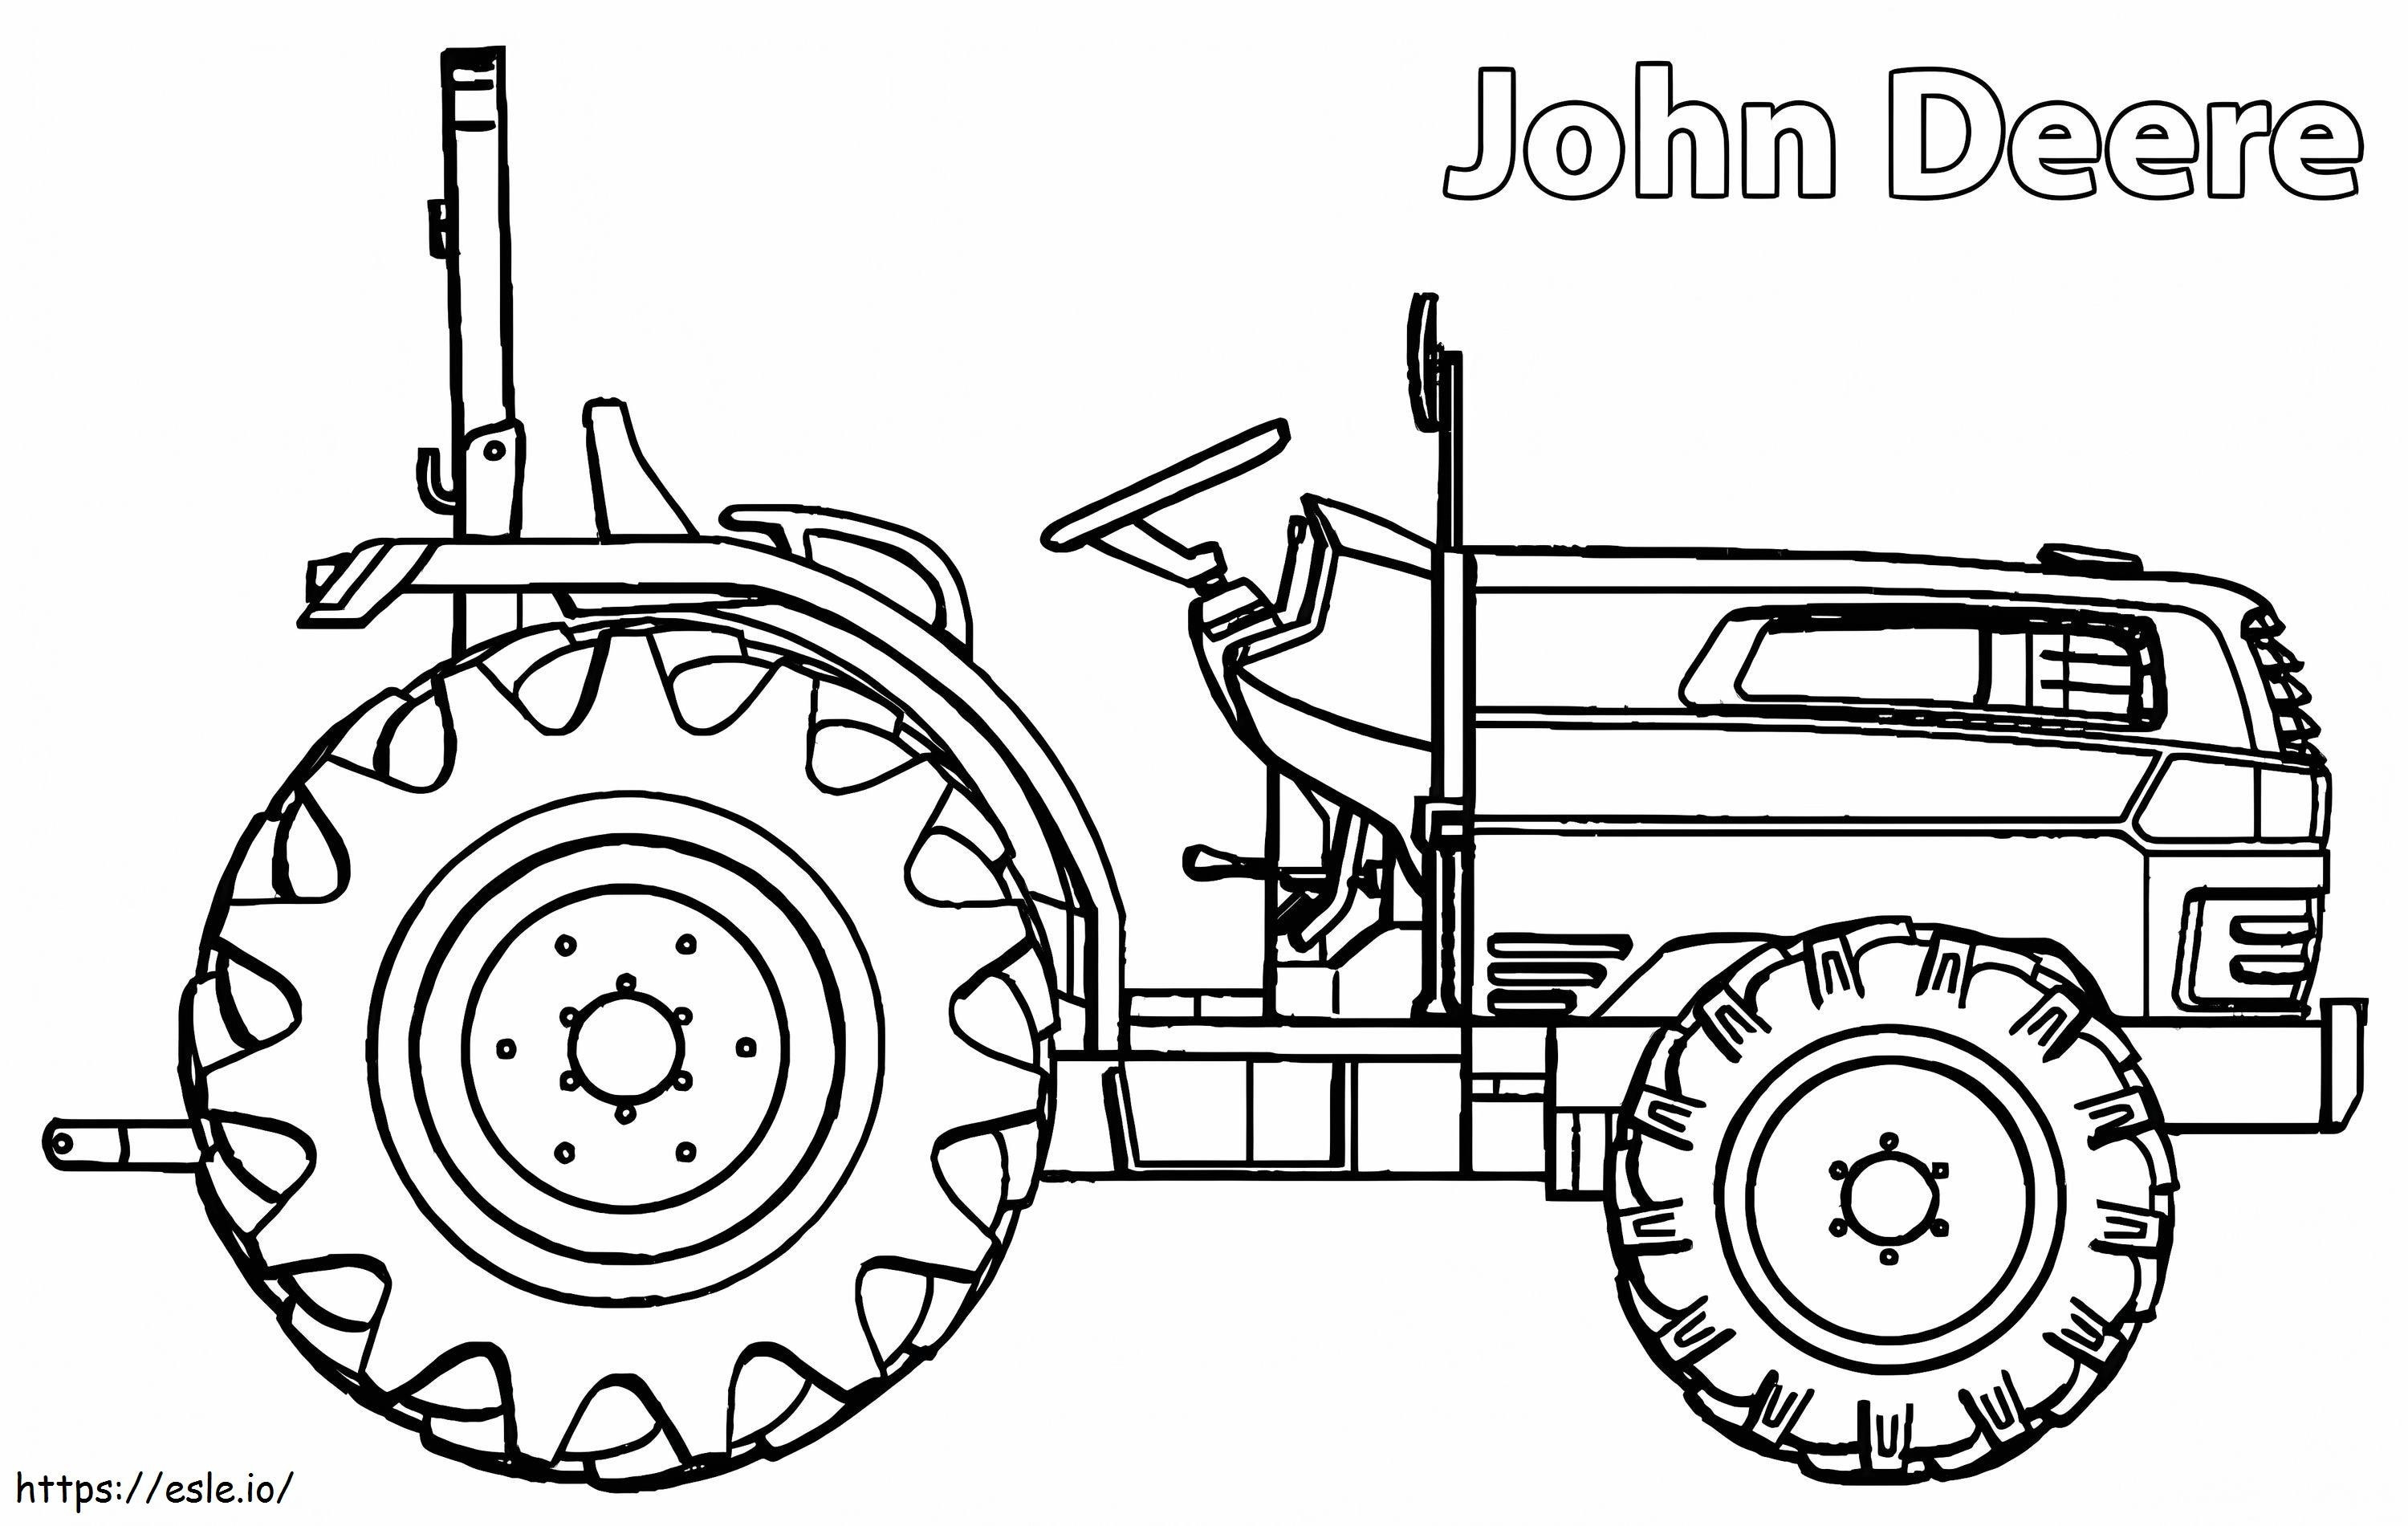 Coloriage John Deere1 à imprimer dessin